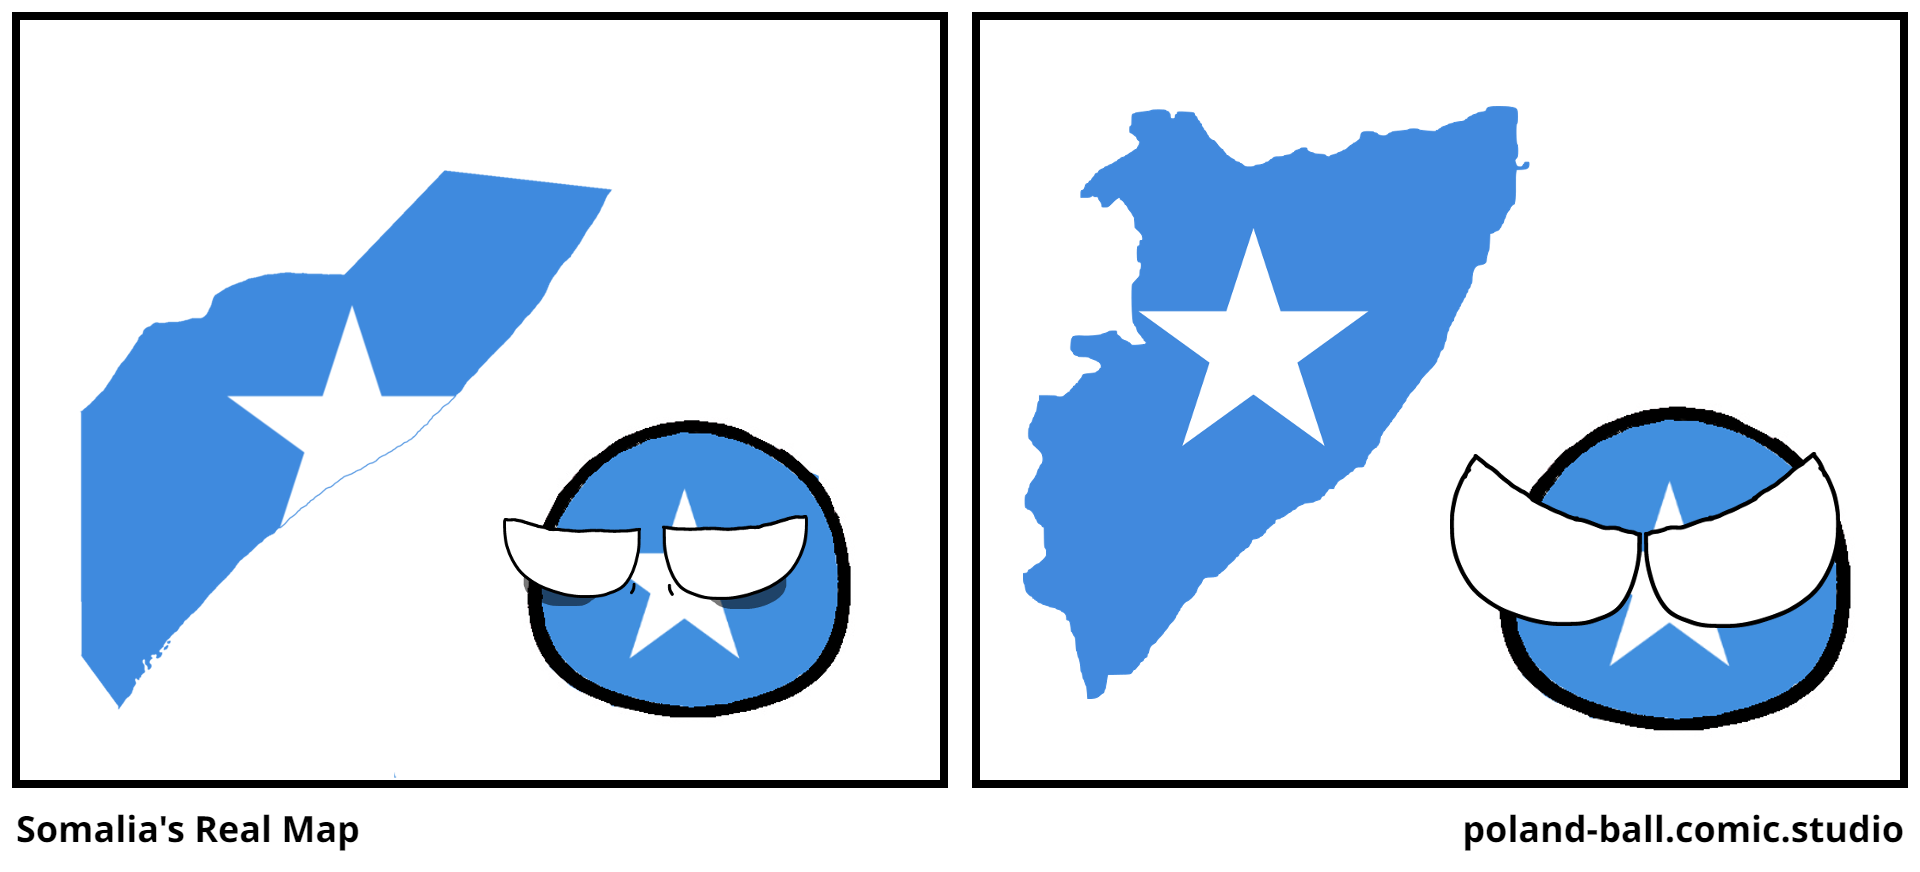 Somalia's Real Map